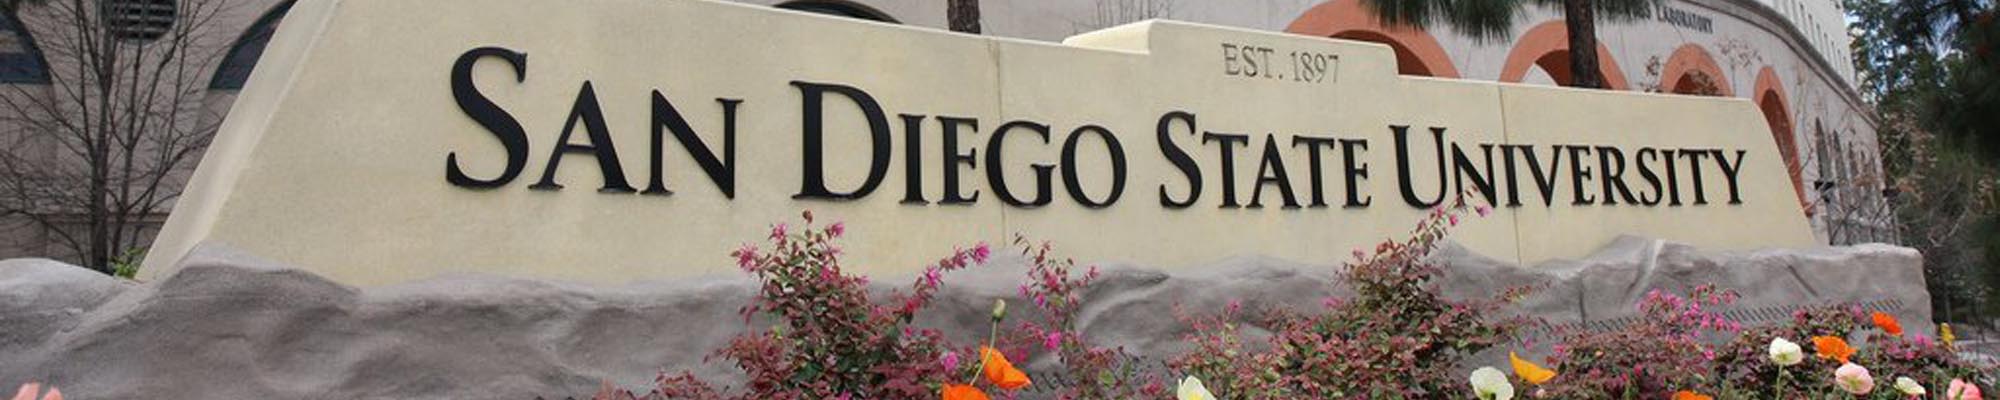 San Diego State University established 1897